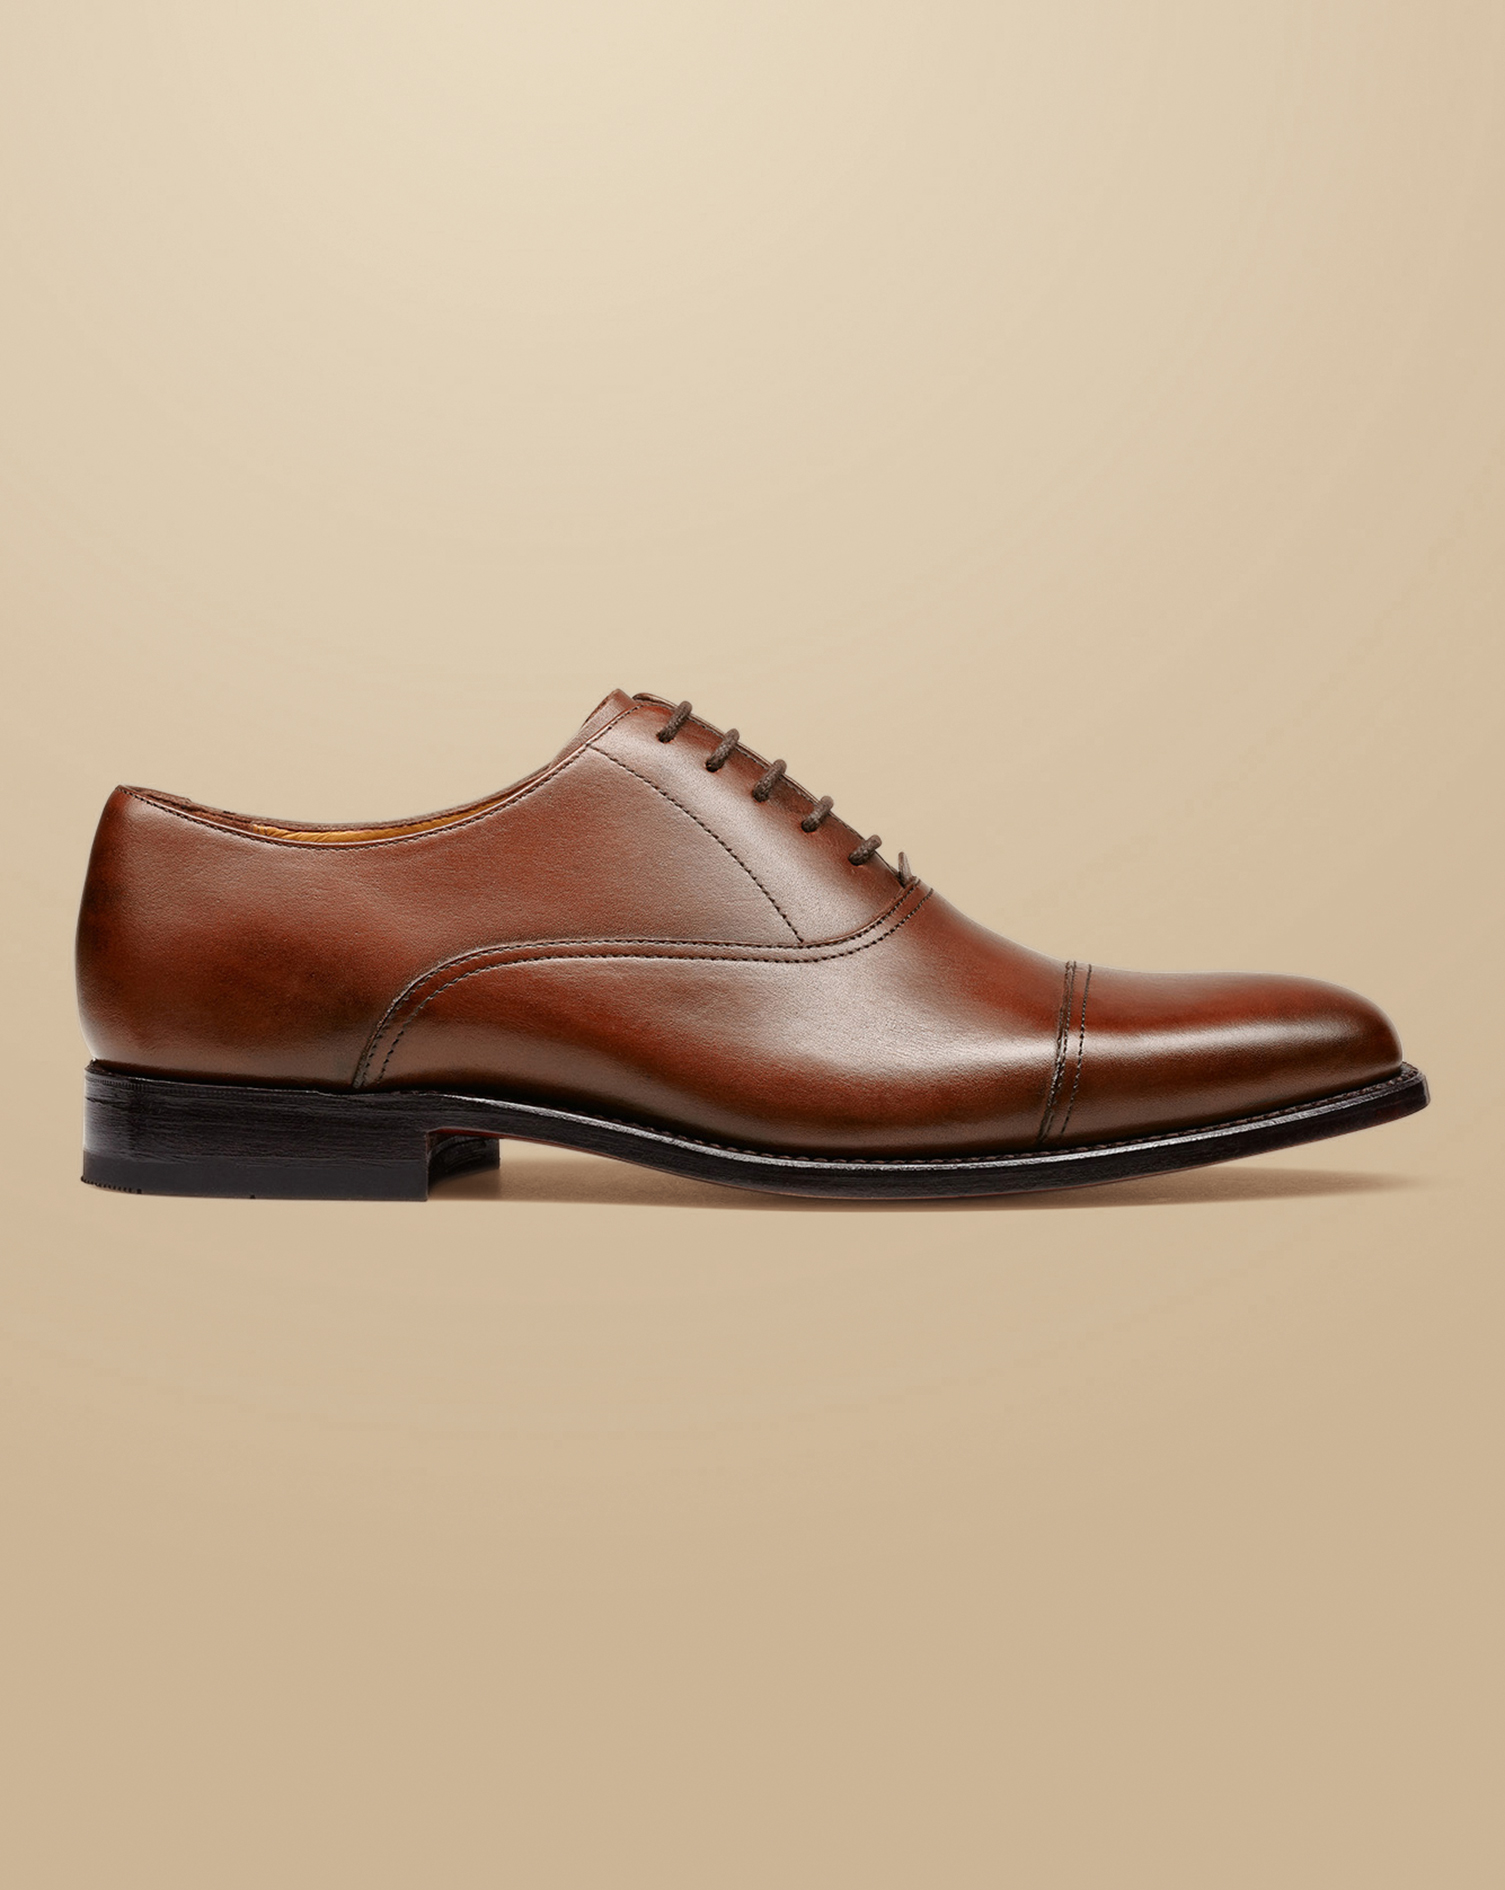 Men's Leather Oxford Shoes - Dark Tan Brown, 7 R by Charles Tyrwhitt